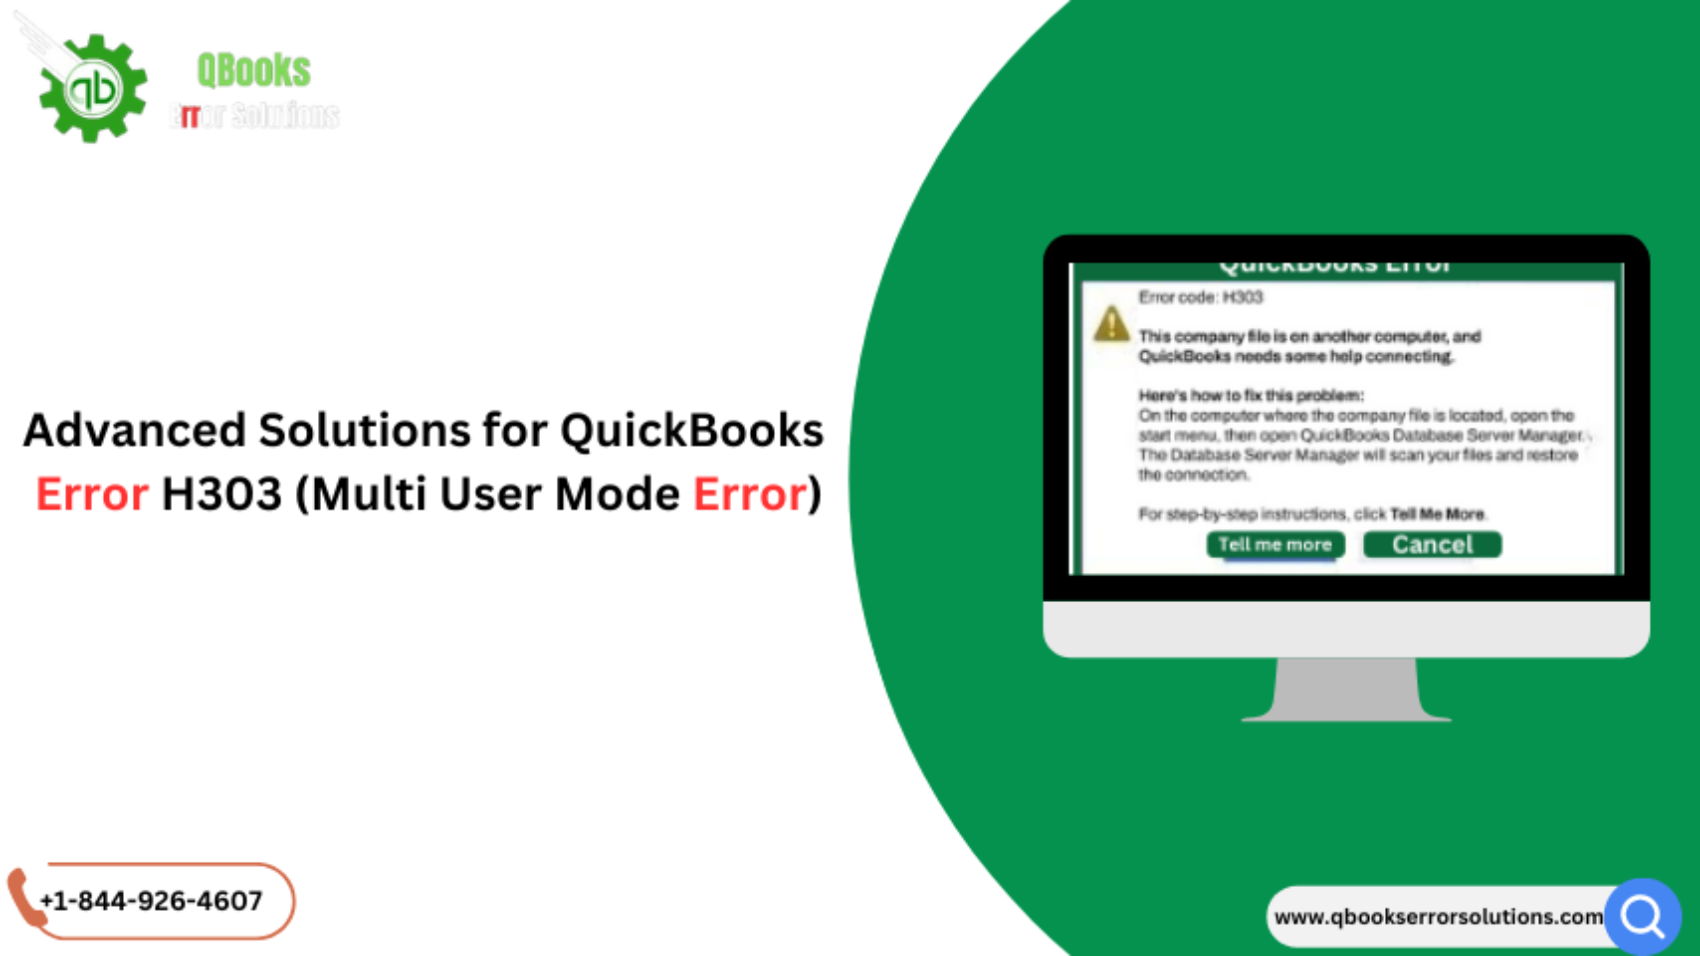 How to Troubleshoot QuickBooks Error Code H303